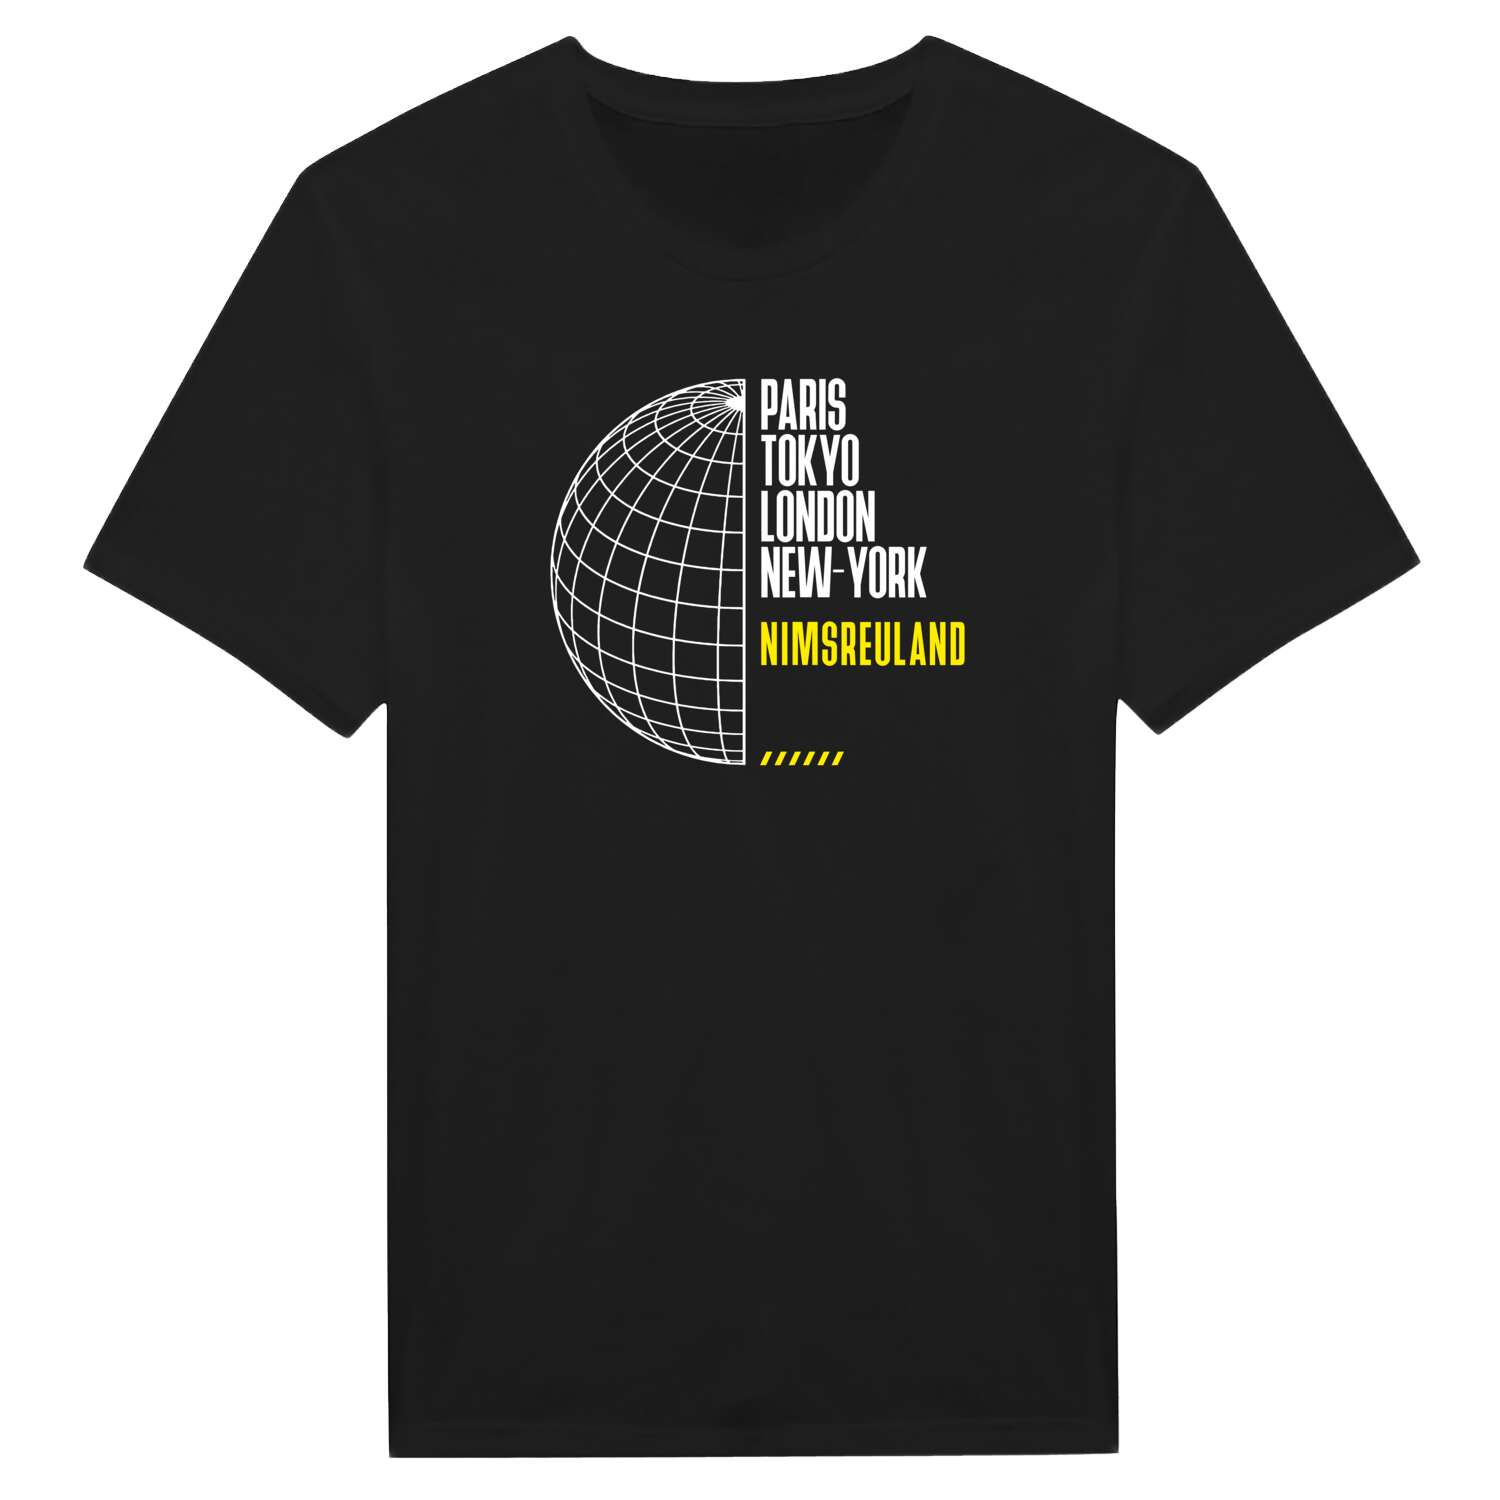 Nimsreuland T-Shirt »Paris Tokyo London«